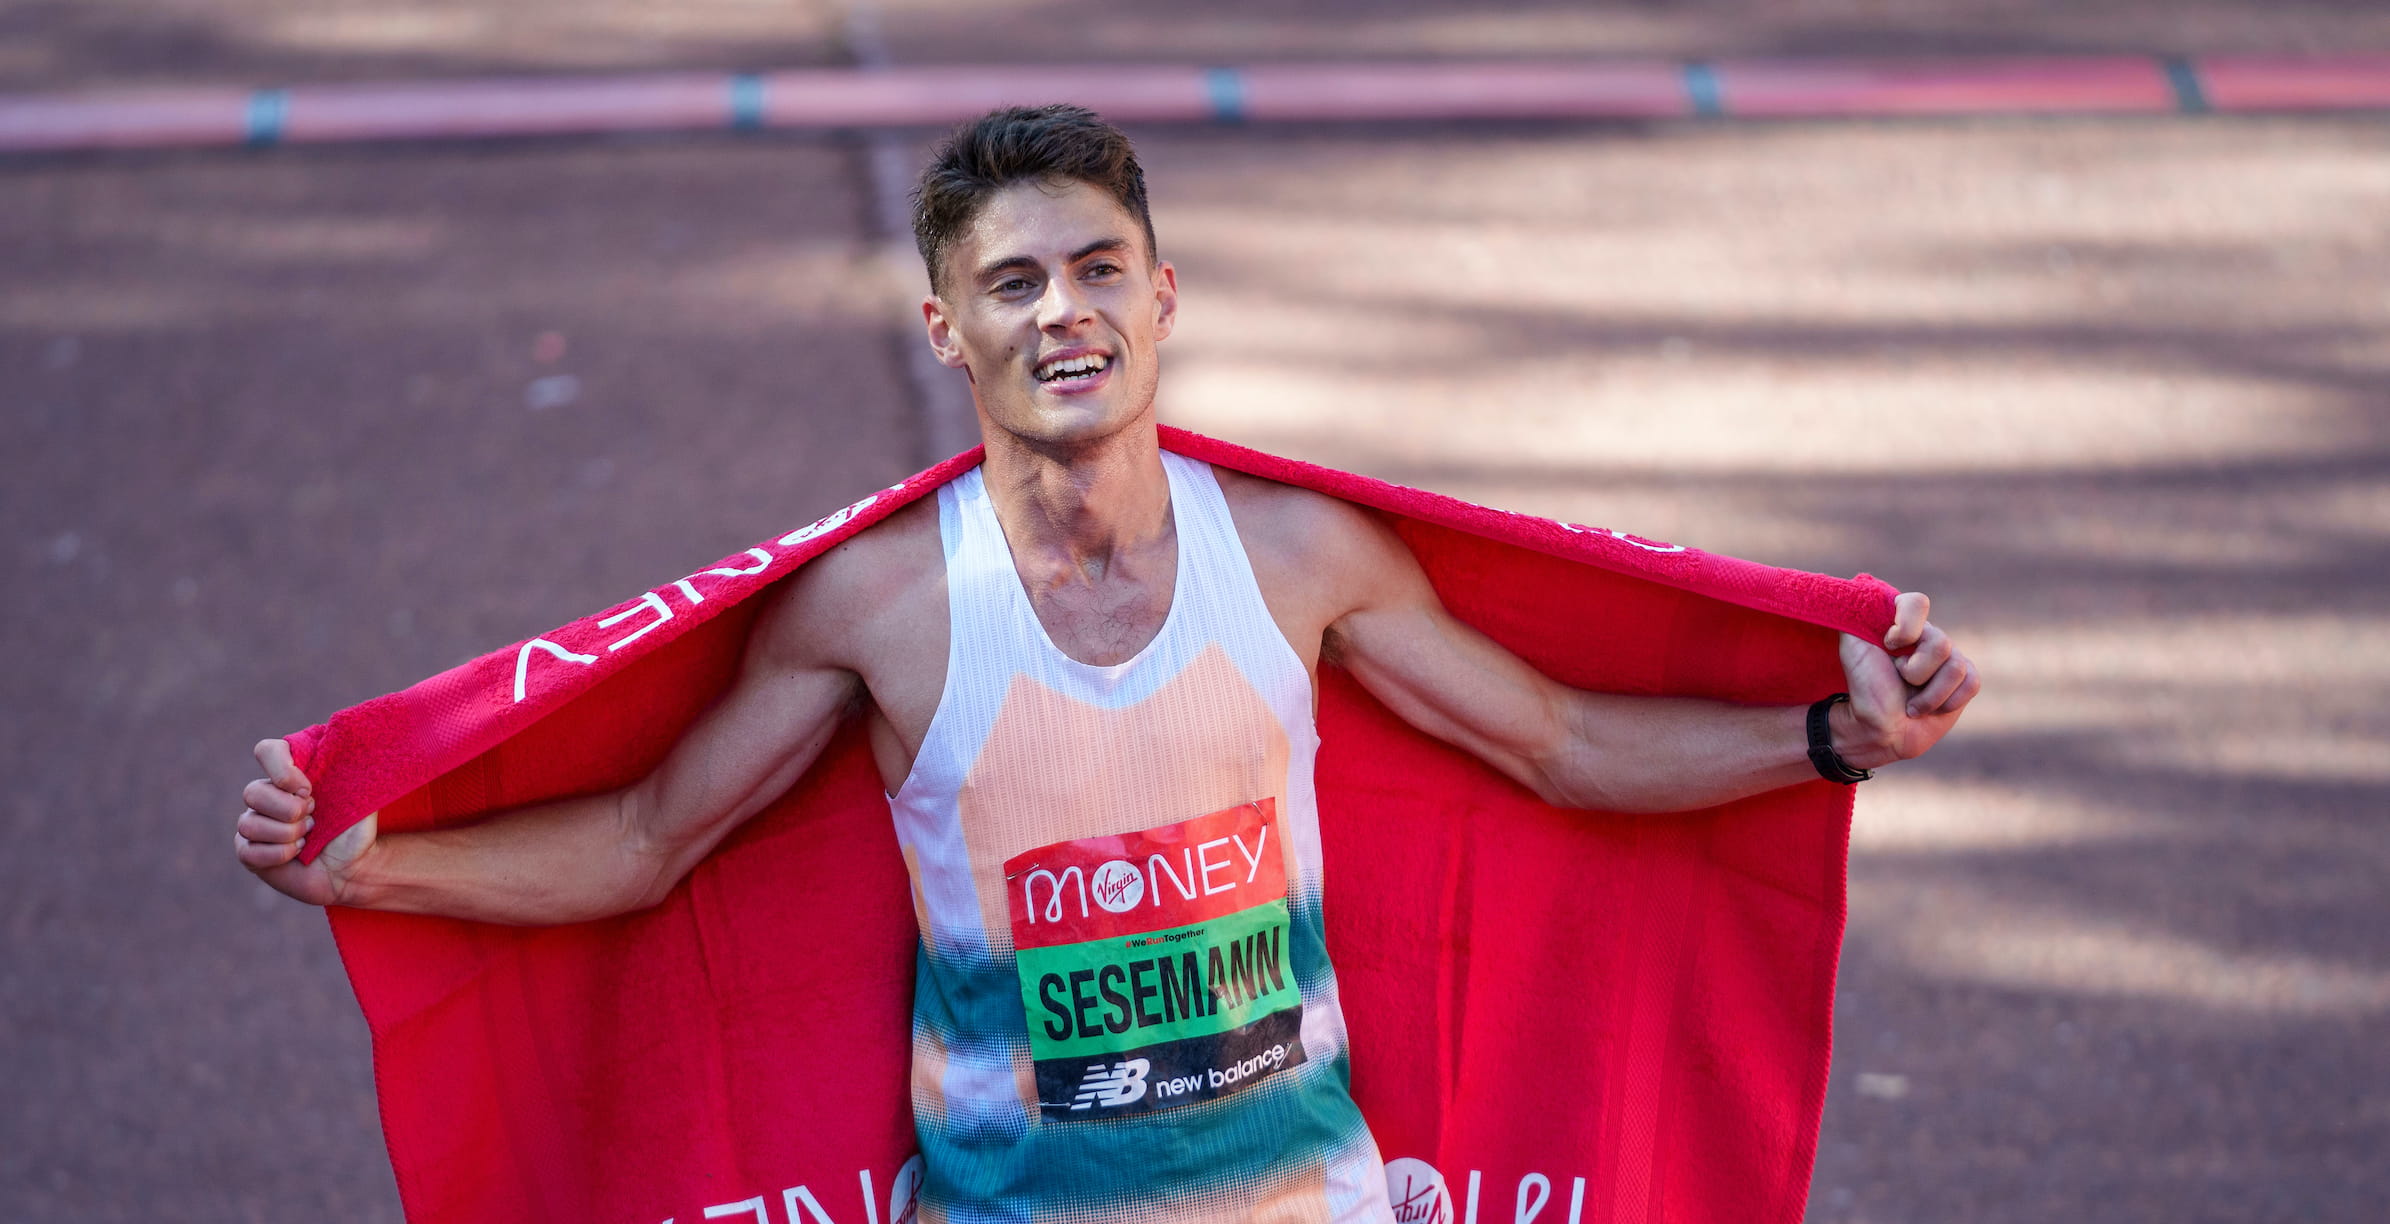 Phil Sesemann completes the 2021 London Marathon